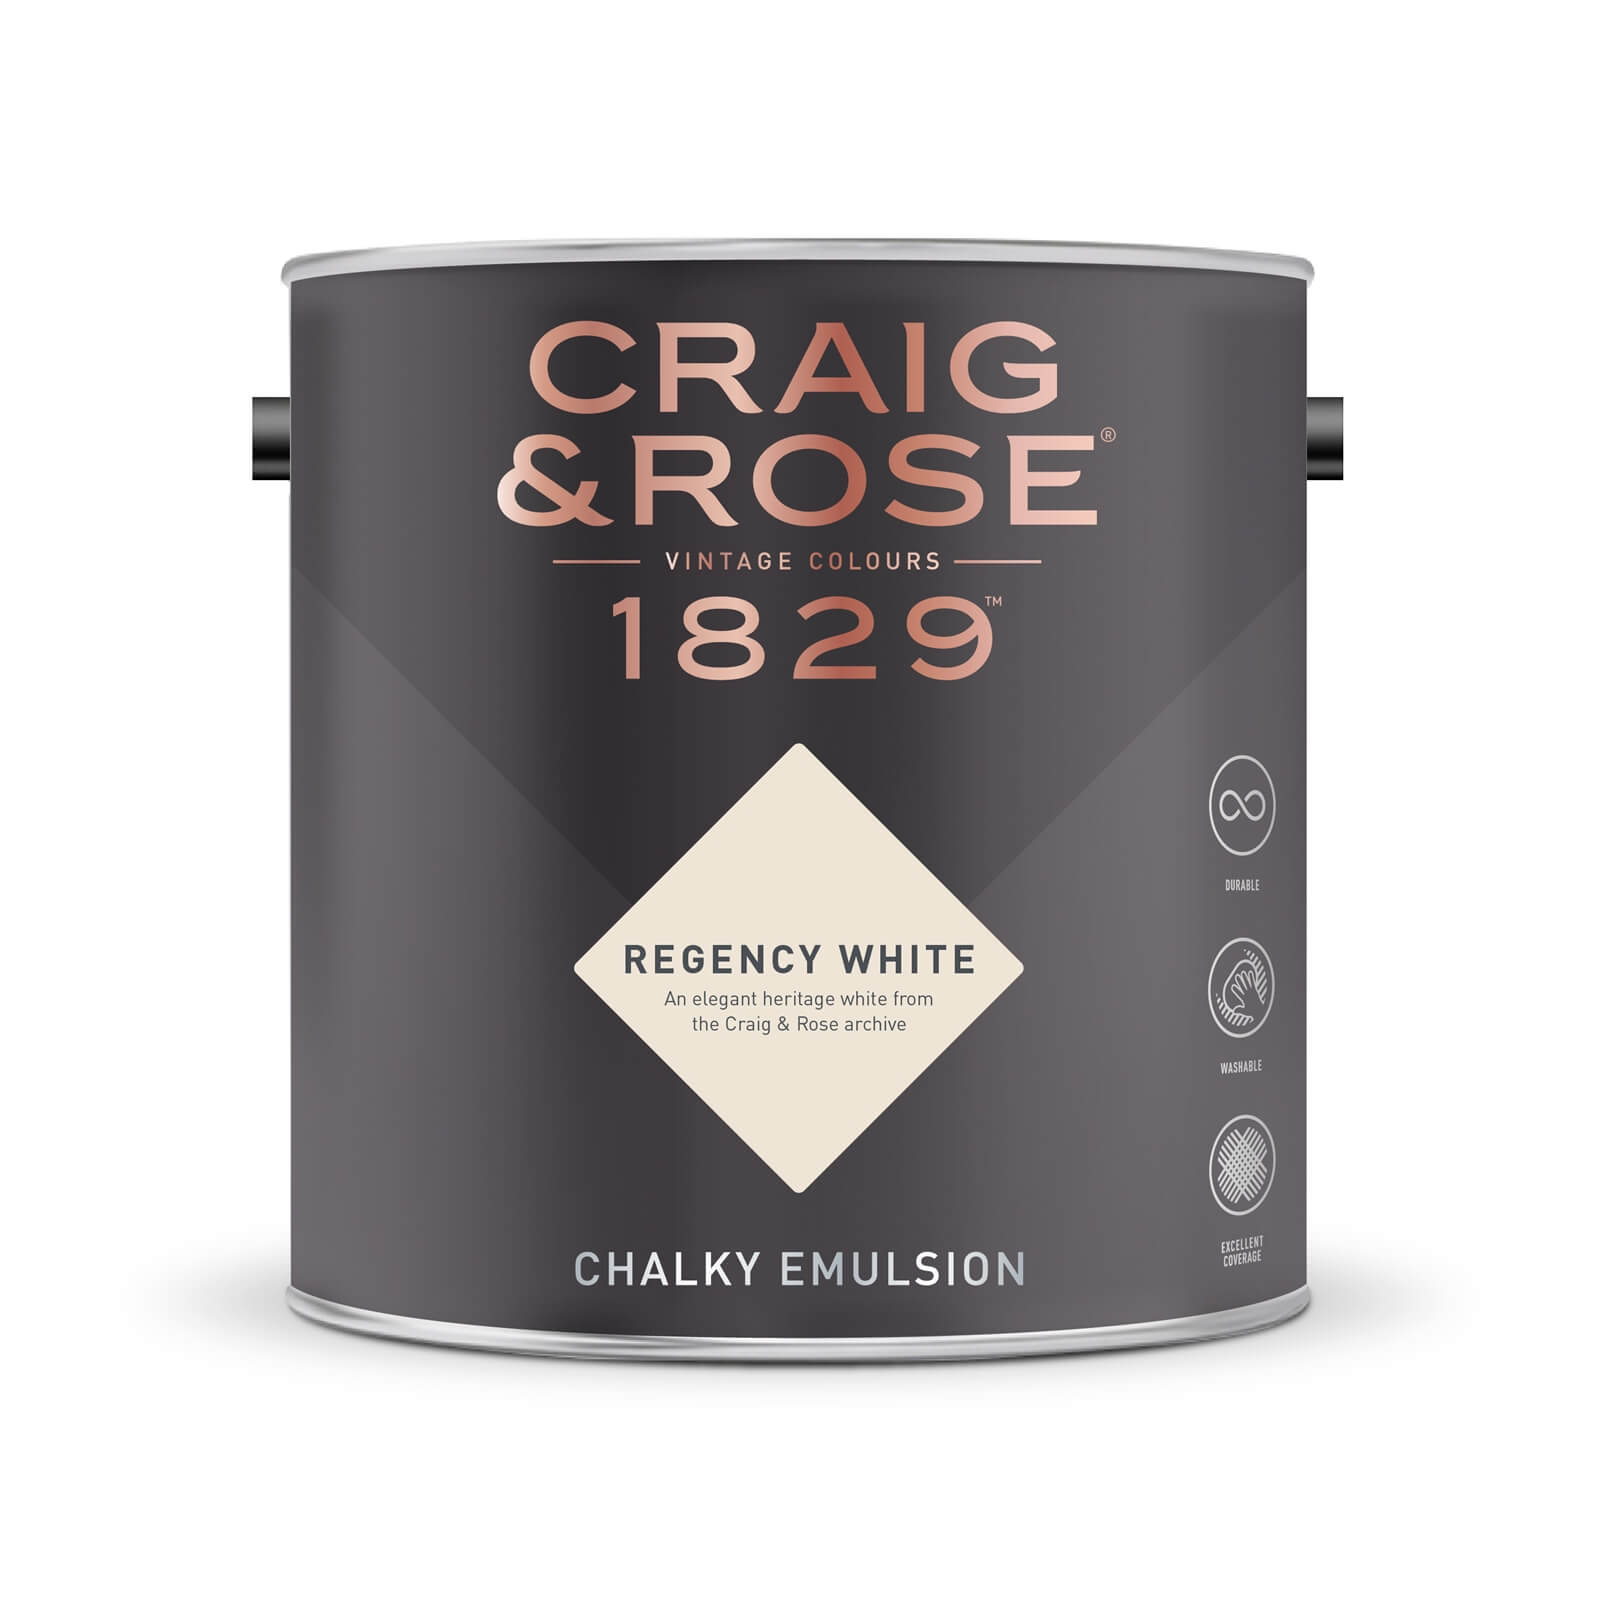 Craig & Rose 1829 Chalky Emulsion Paint Regency White - 5L